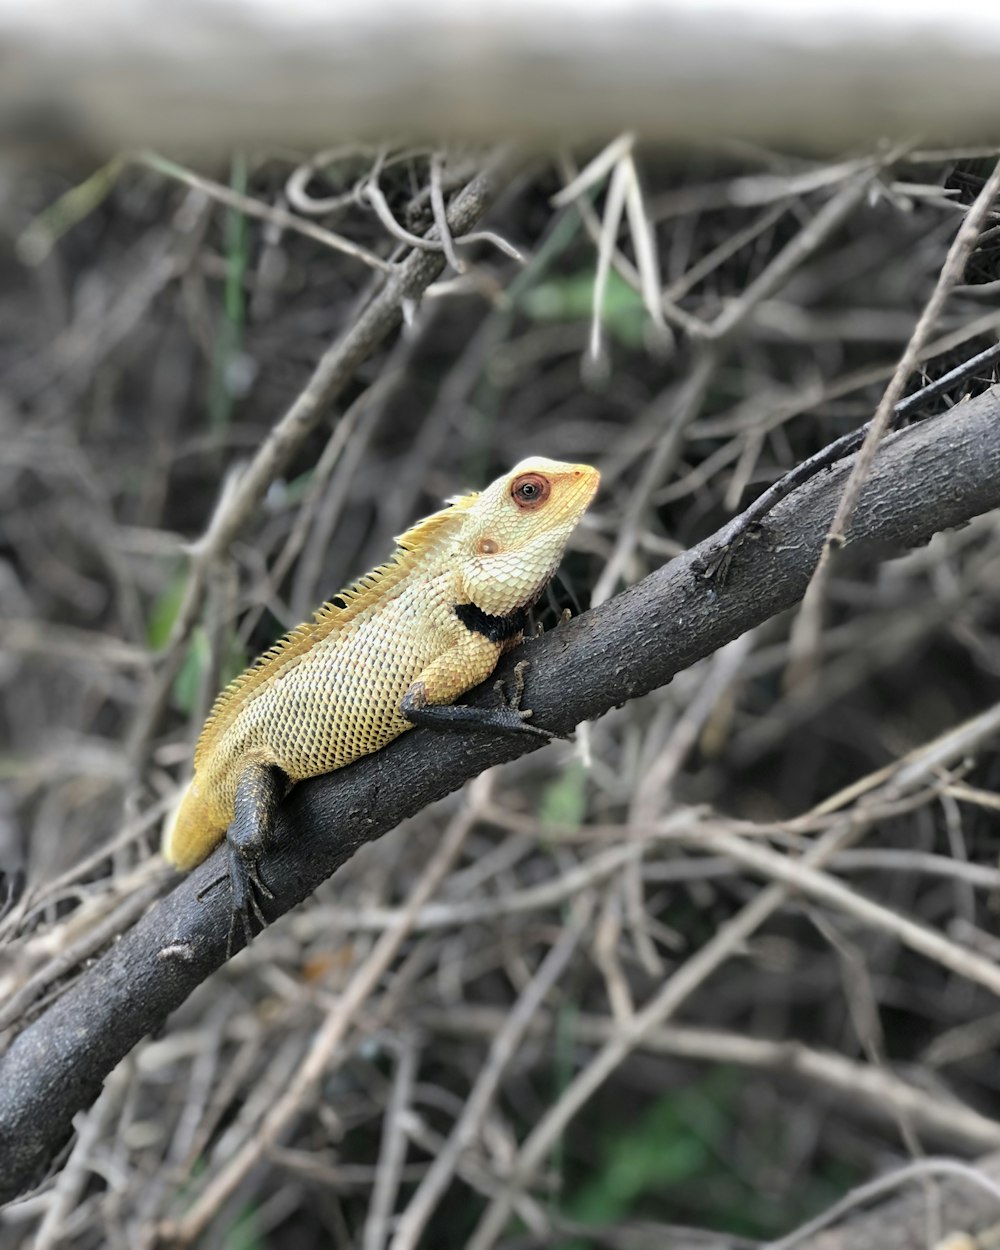 yellow lizard